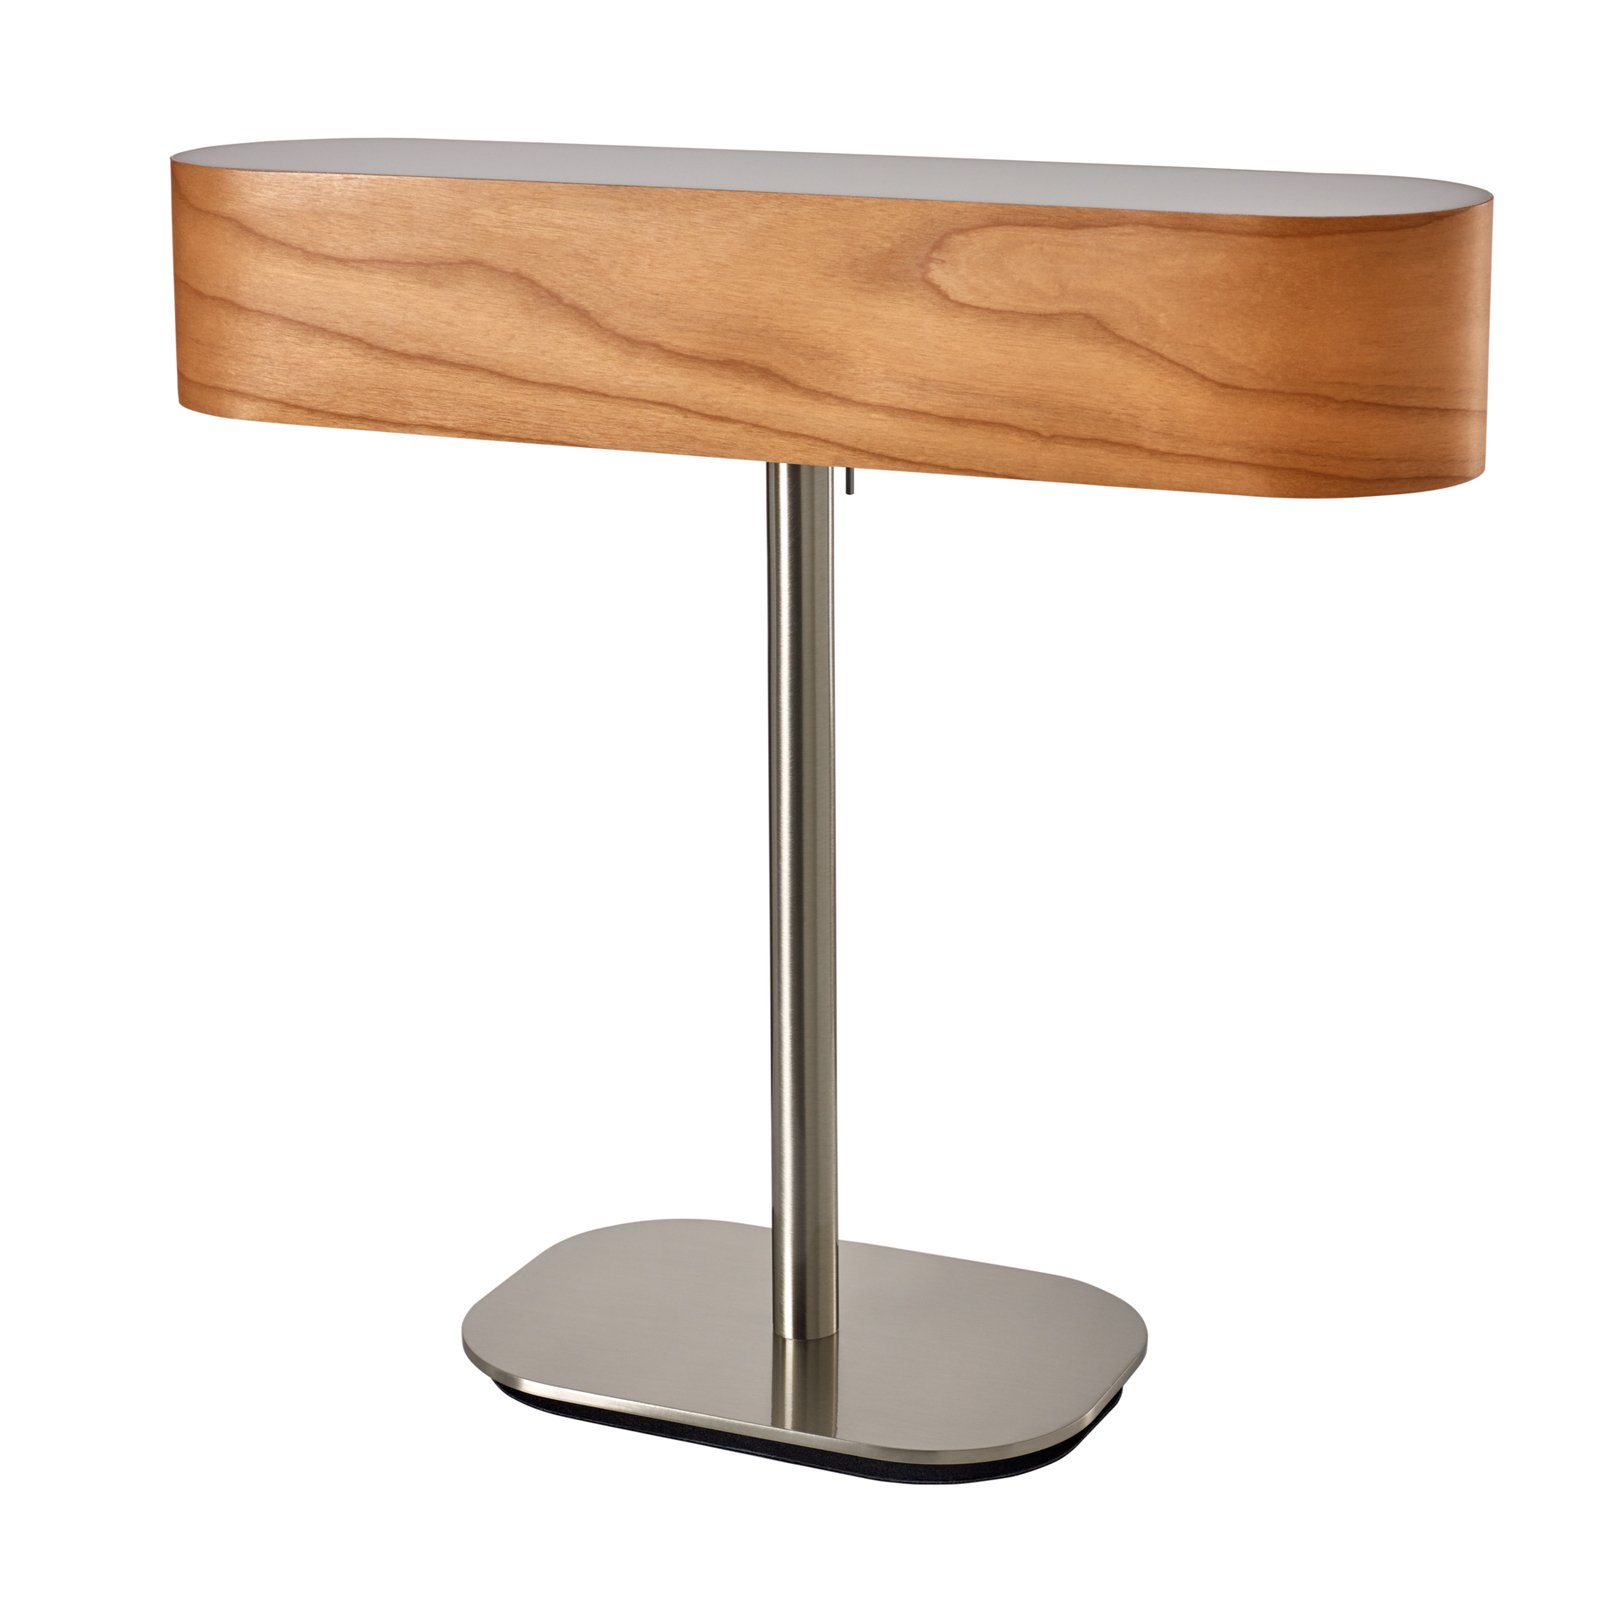 LZF I-Club LED table lamp, dimmer, cherry wood